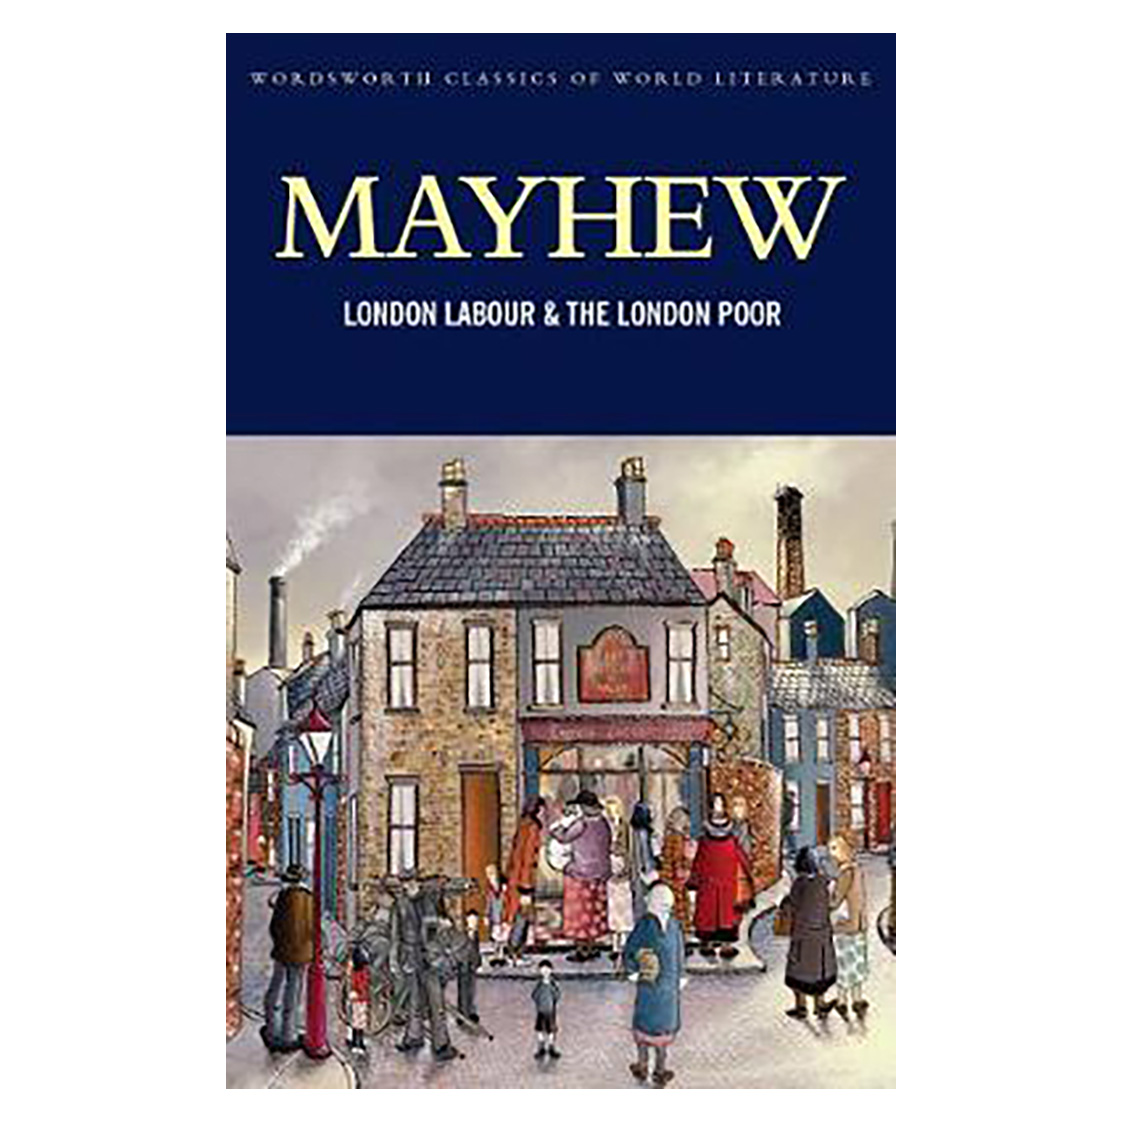 کتاب MAYHEW London Labour and the London Poor اثر Henry Mayhew انتشارات وردزورث